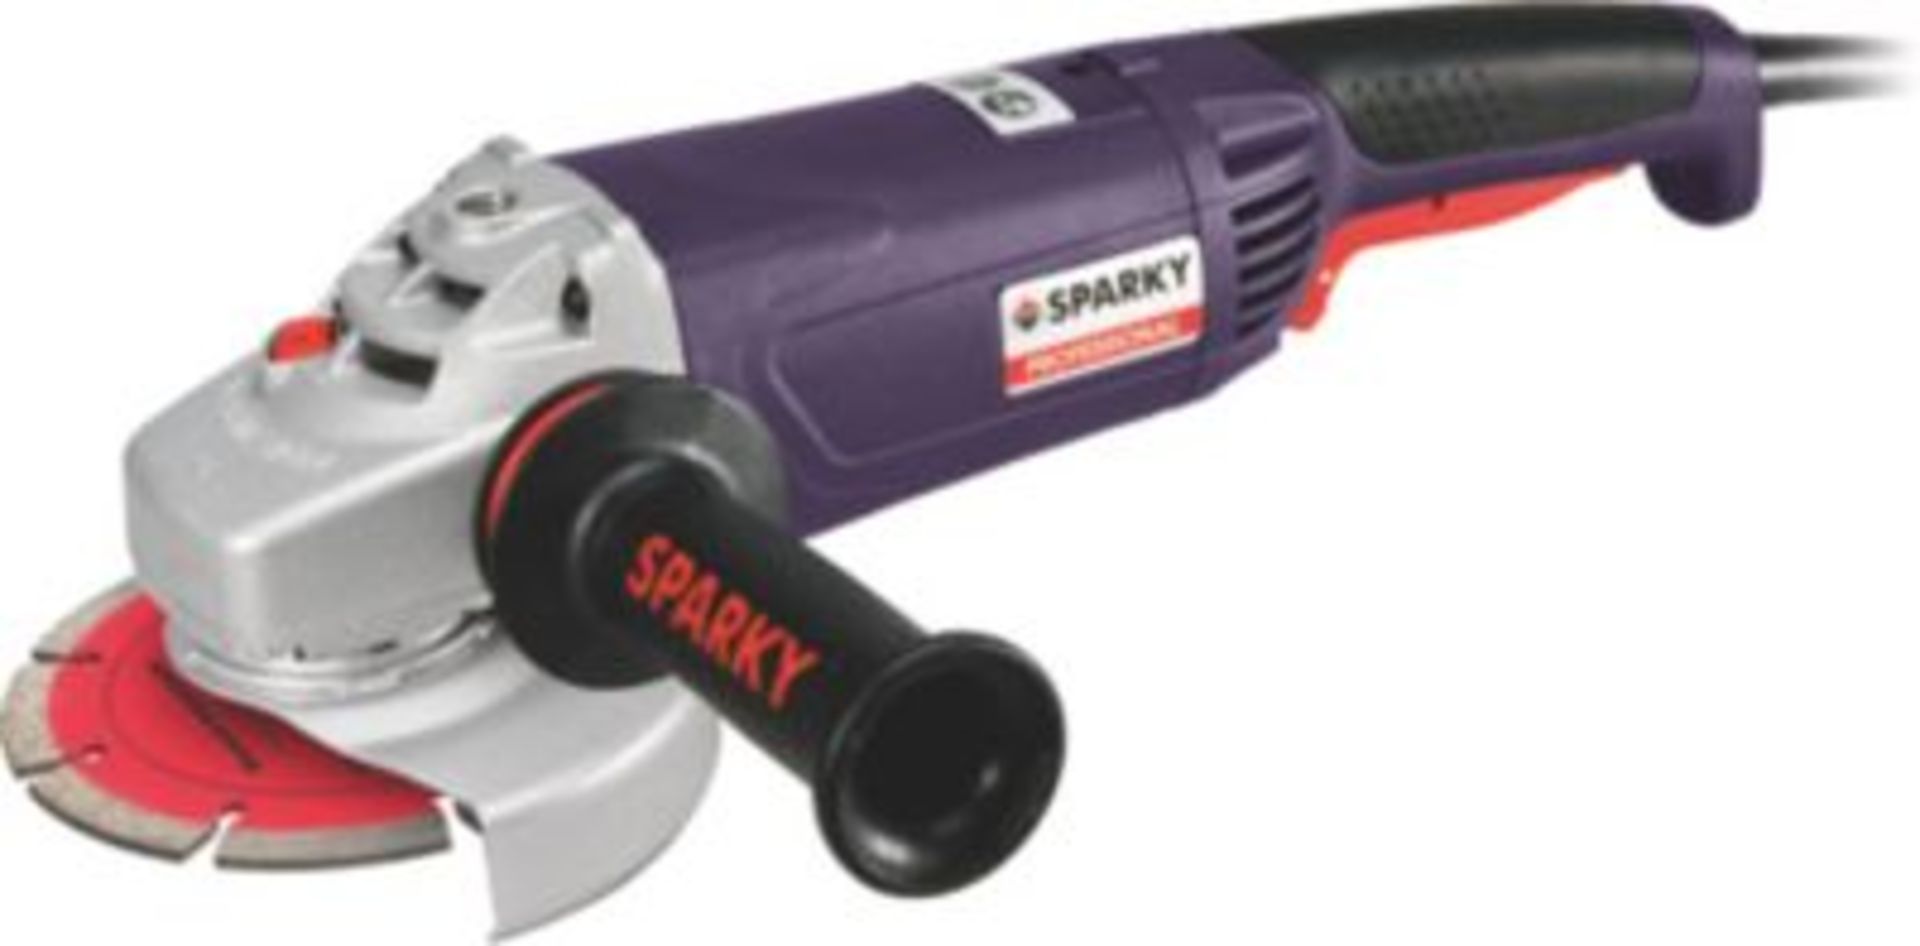 Brand New Sparky Professional M1300 Long Handled Angle Grinder - 1300W 125mm Disc - 110V ISP £60.97